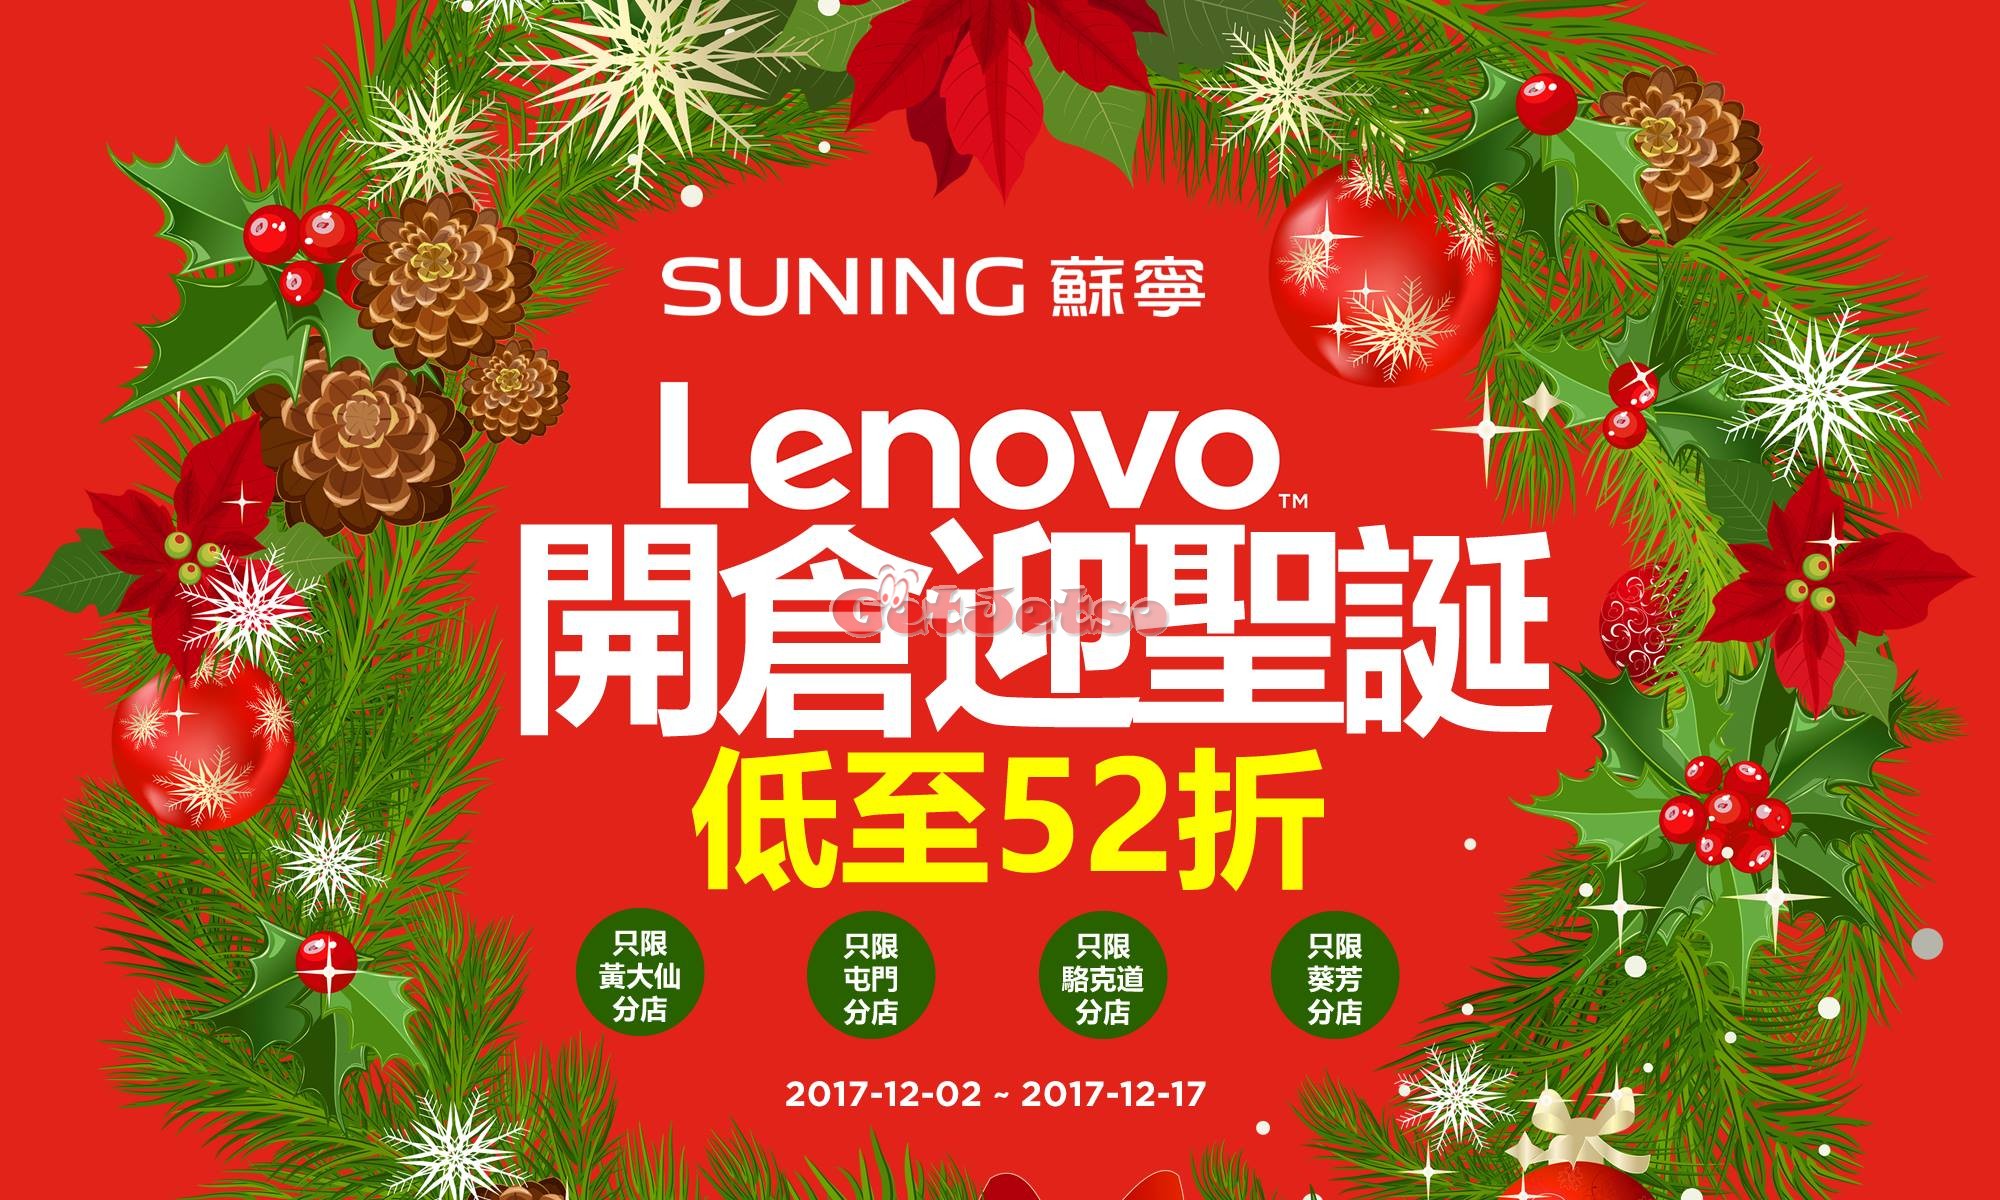 Lenovo 低至52折開倉優惠@Suning 蘇寧指定分店(至17年12月17日)圖片1